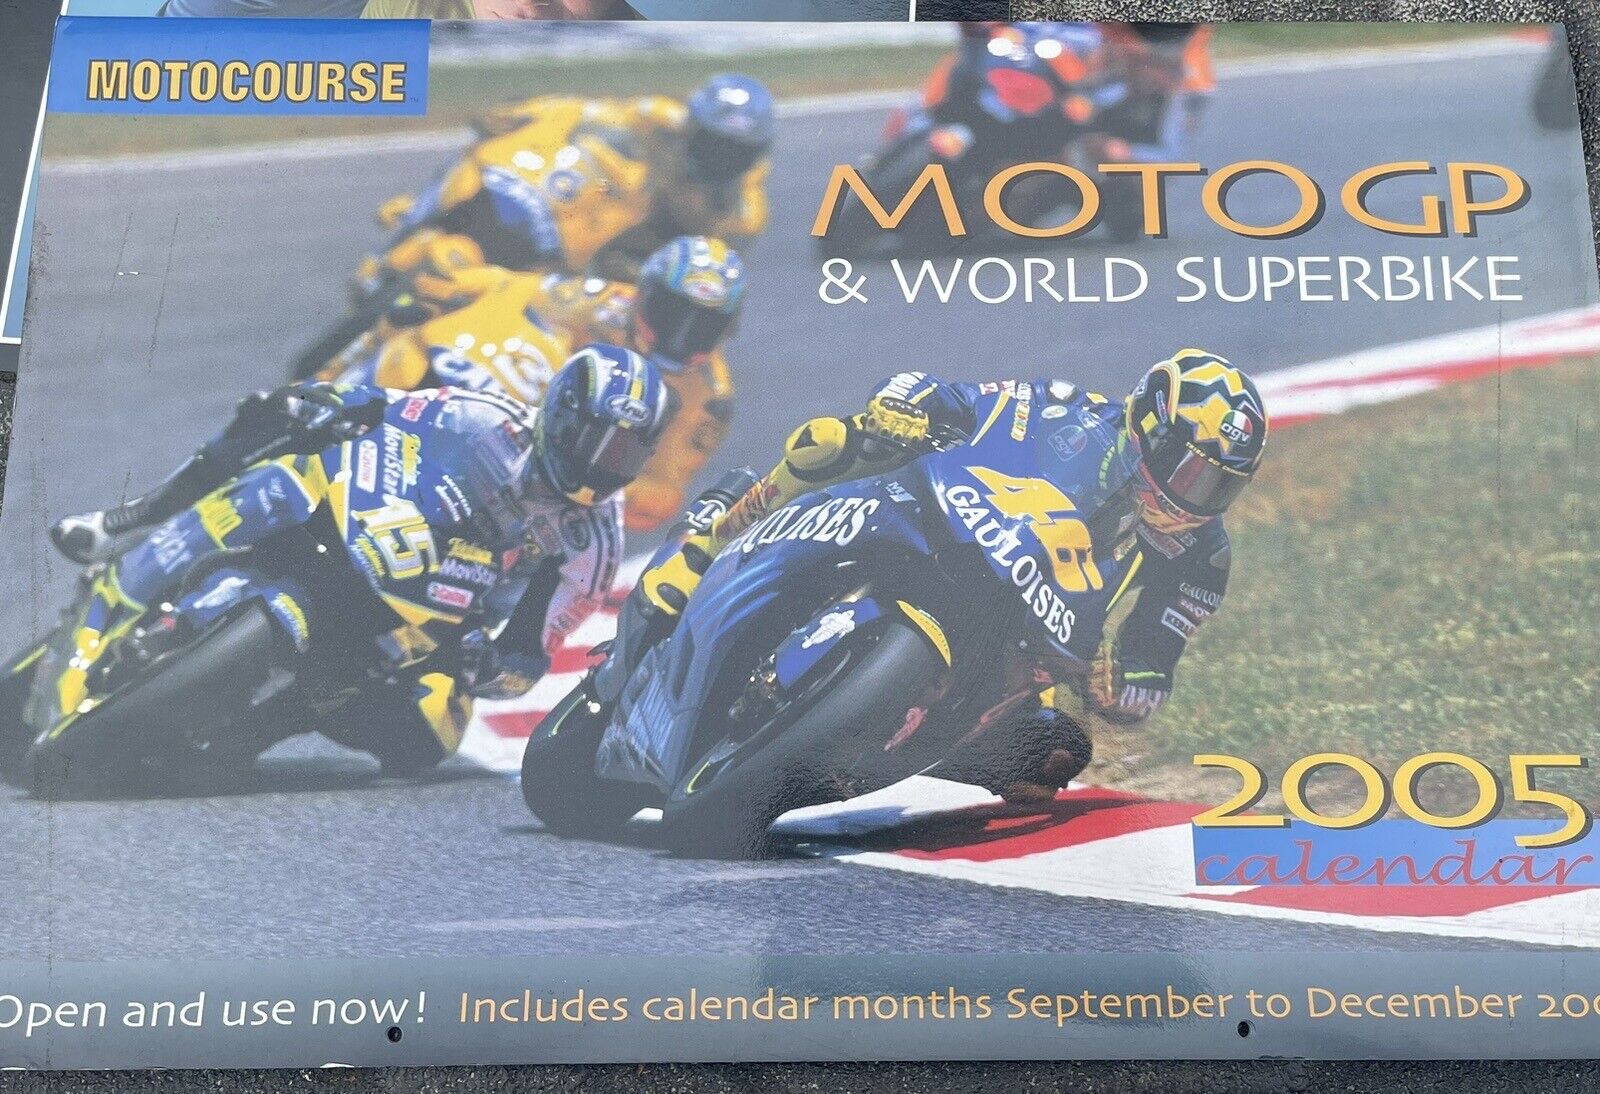 2005 MOTOGP & WORLD SUPERBIKE CALENDAR YAMAHA DUCATI KAWASAKI MOTORCYCLE G